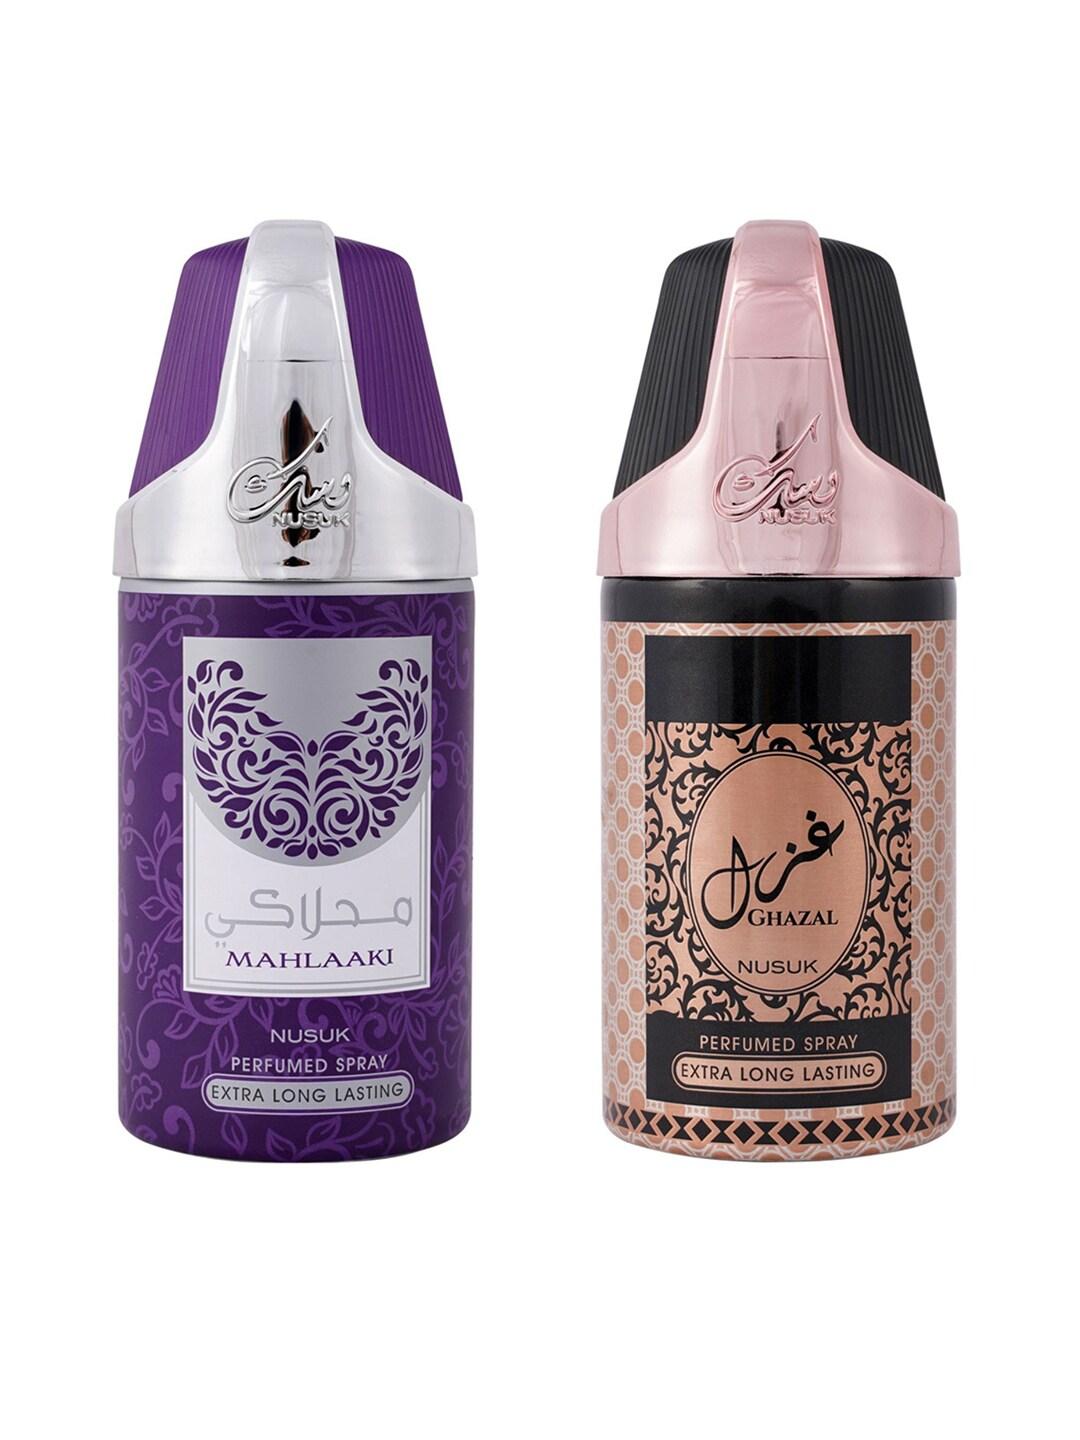 NUSUK Set of 2 Premium Long-Lasting Deodorants 250 ml each - Mahlaaki & Gazal